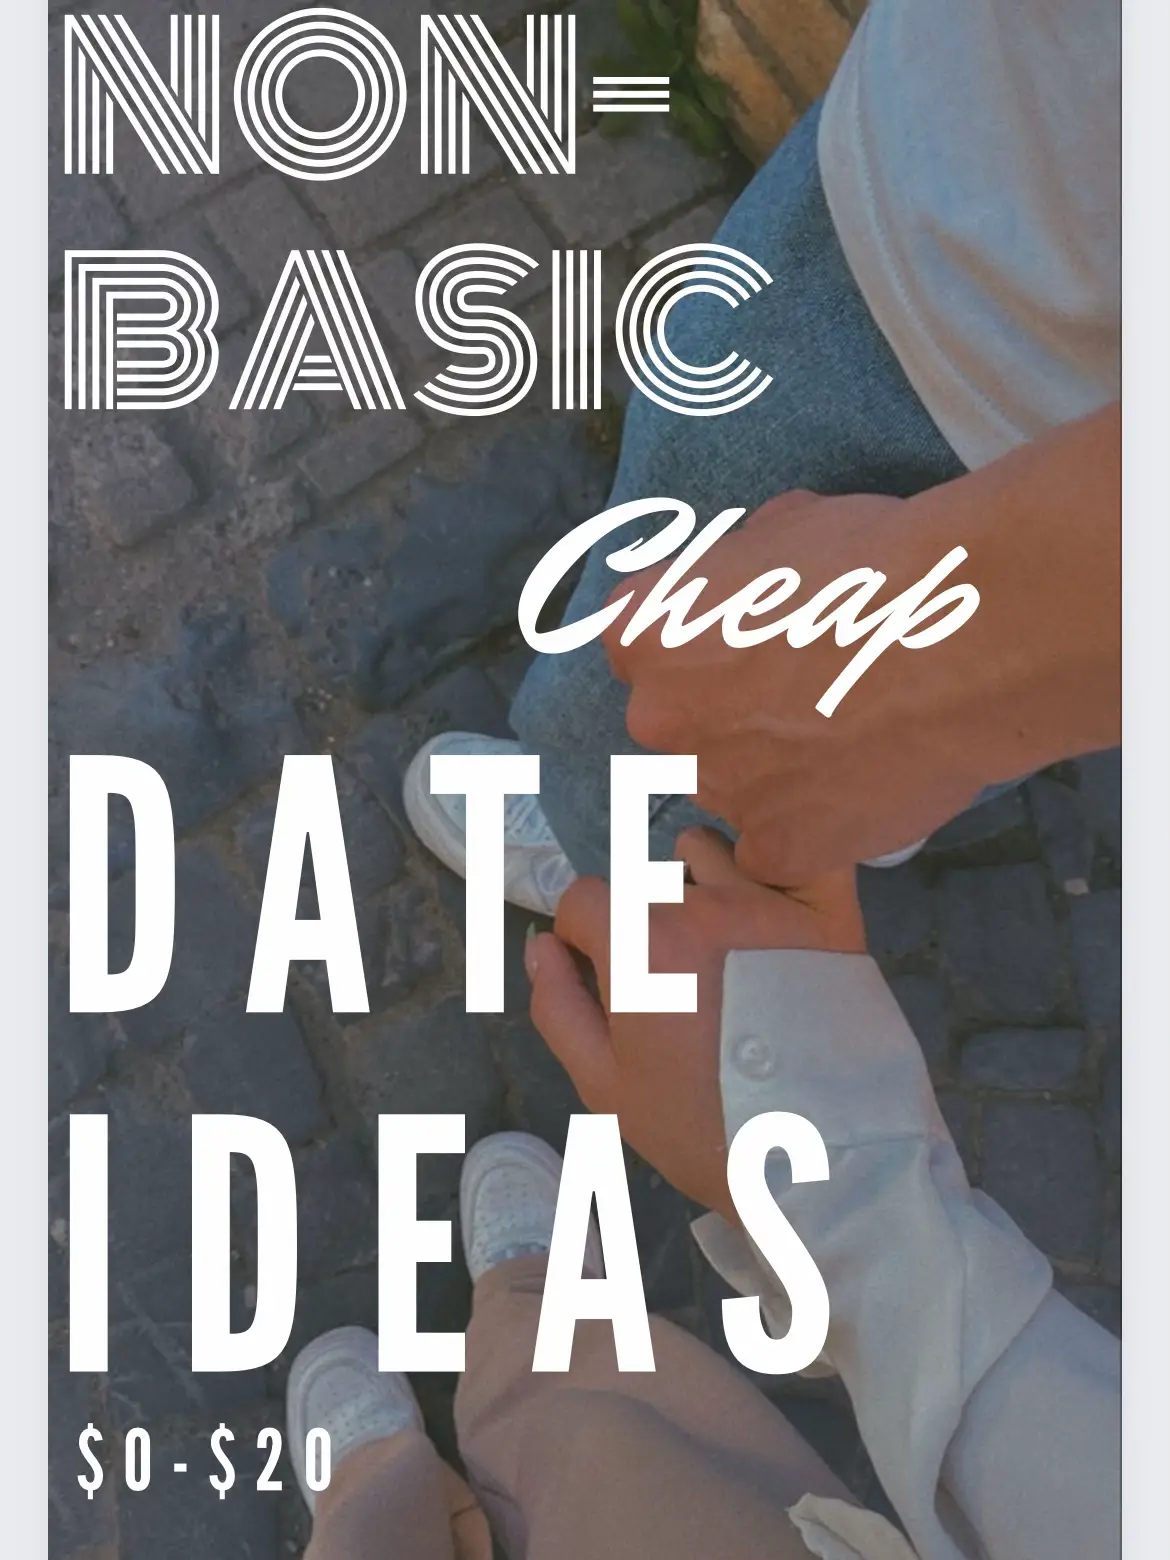 Non-basic cheap date ideas! 's images